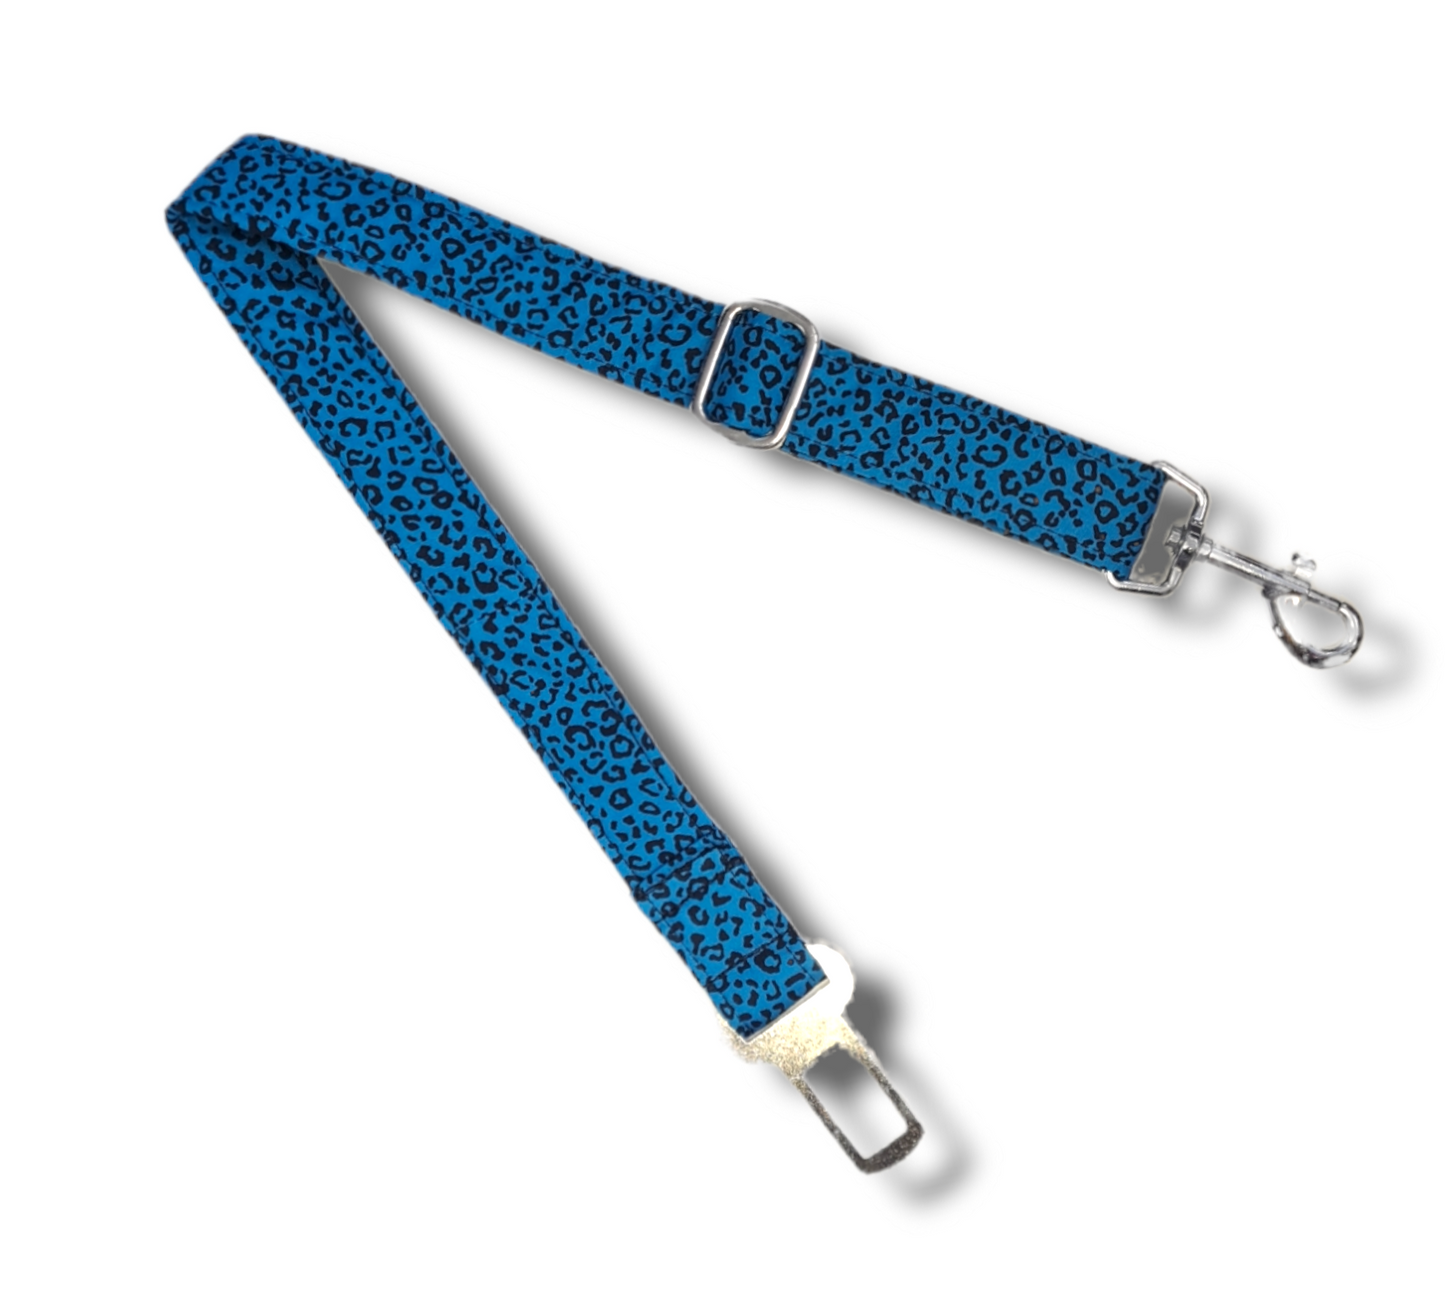 Dog seatbelt -blue leopard print